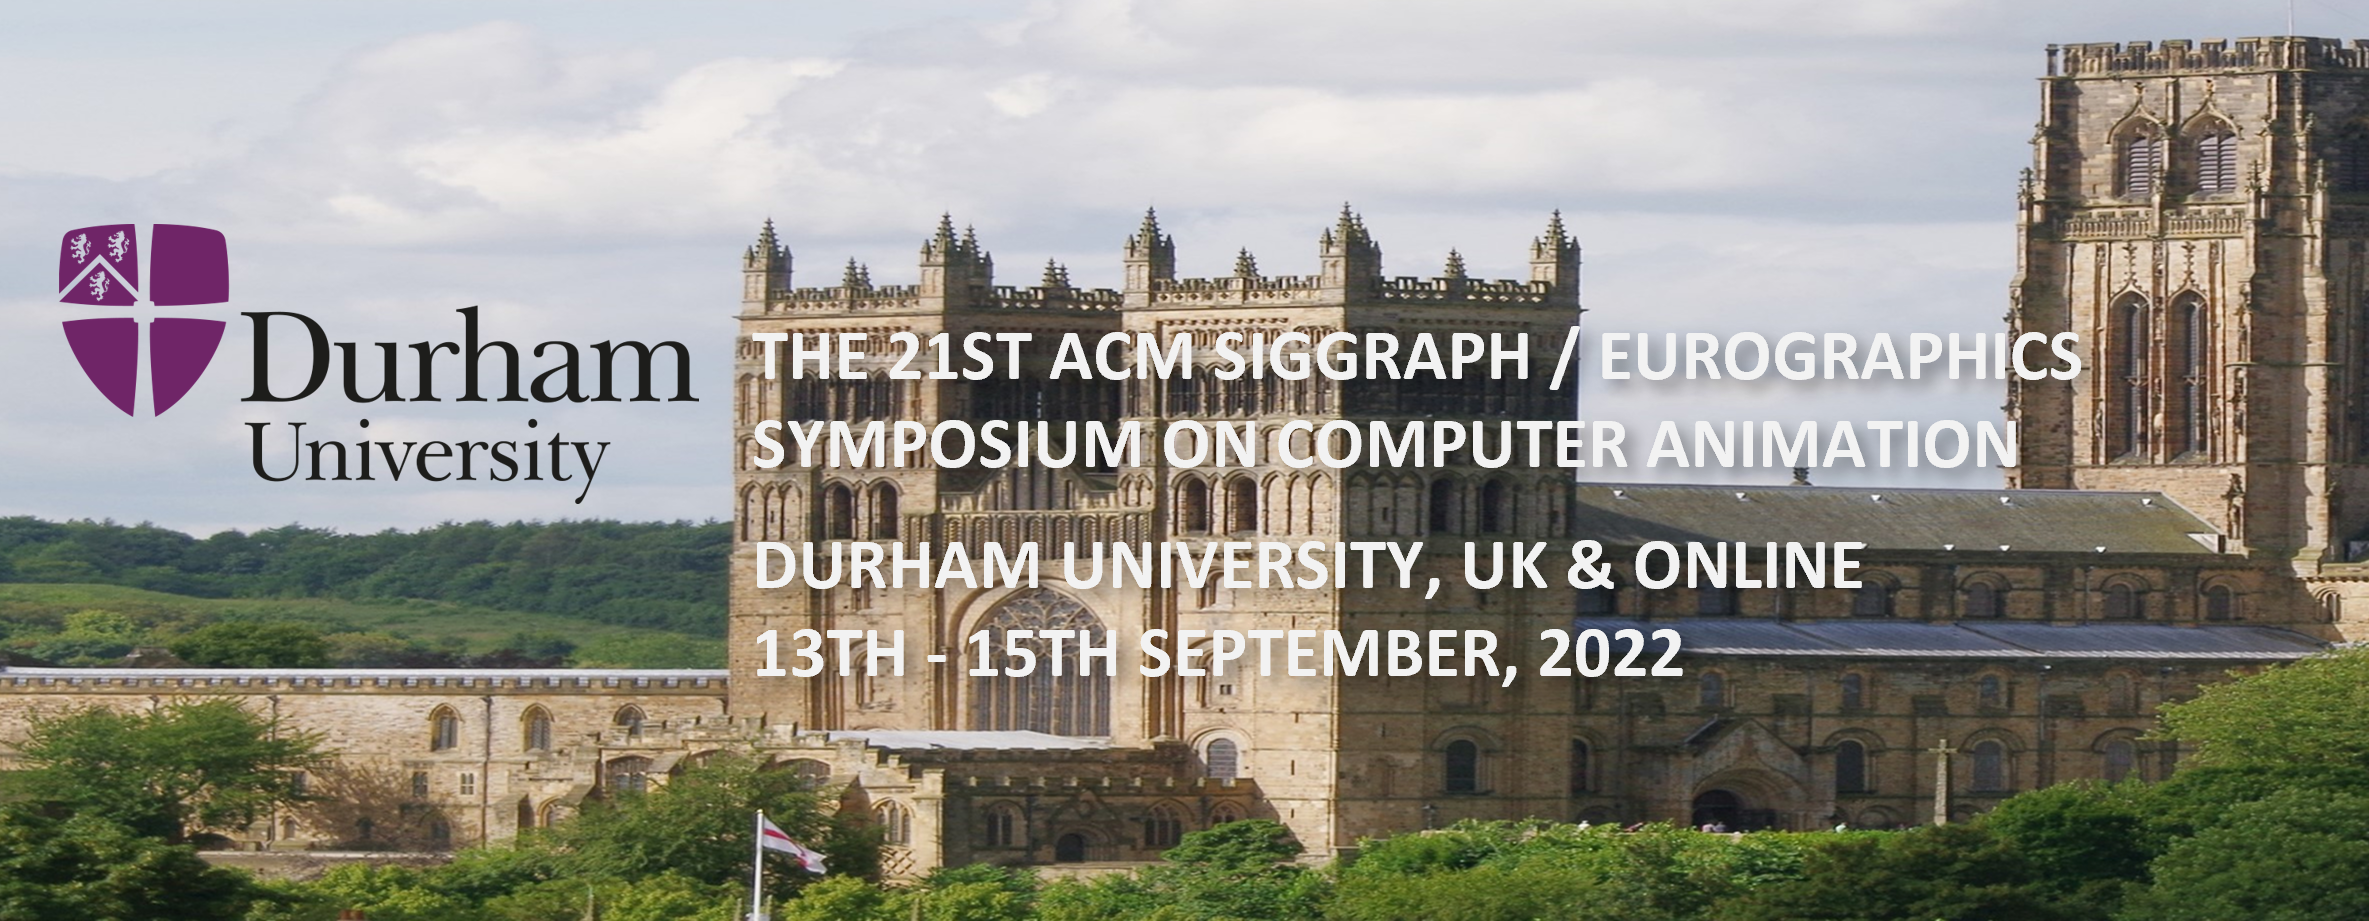 ACM SIGGRAPH/Eurographics Symposium on Computer Animation - On Site Registration